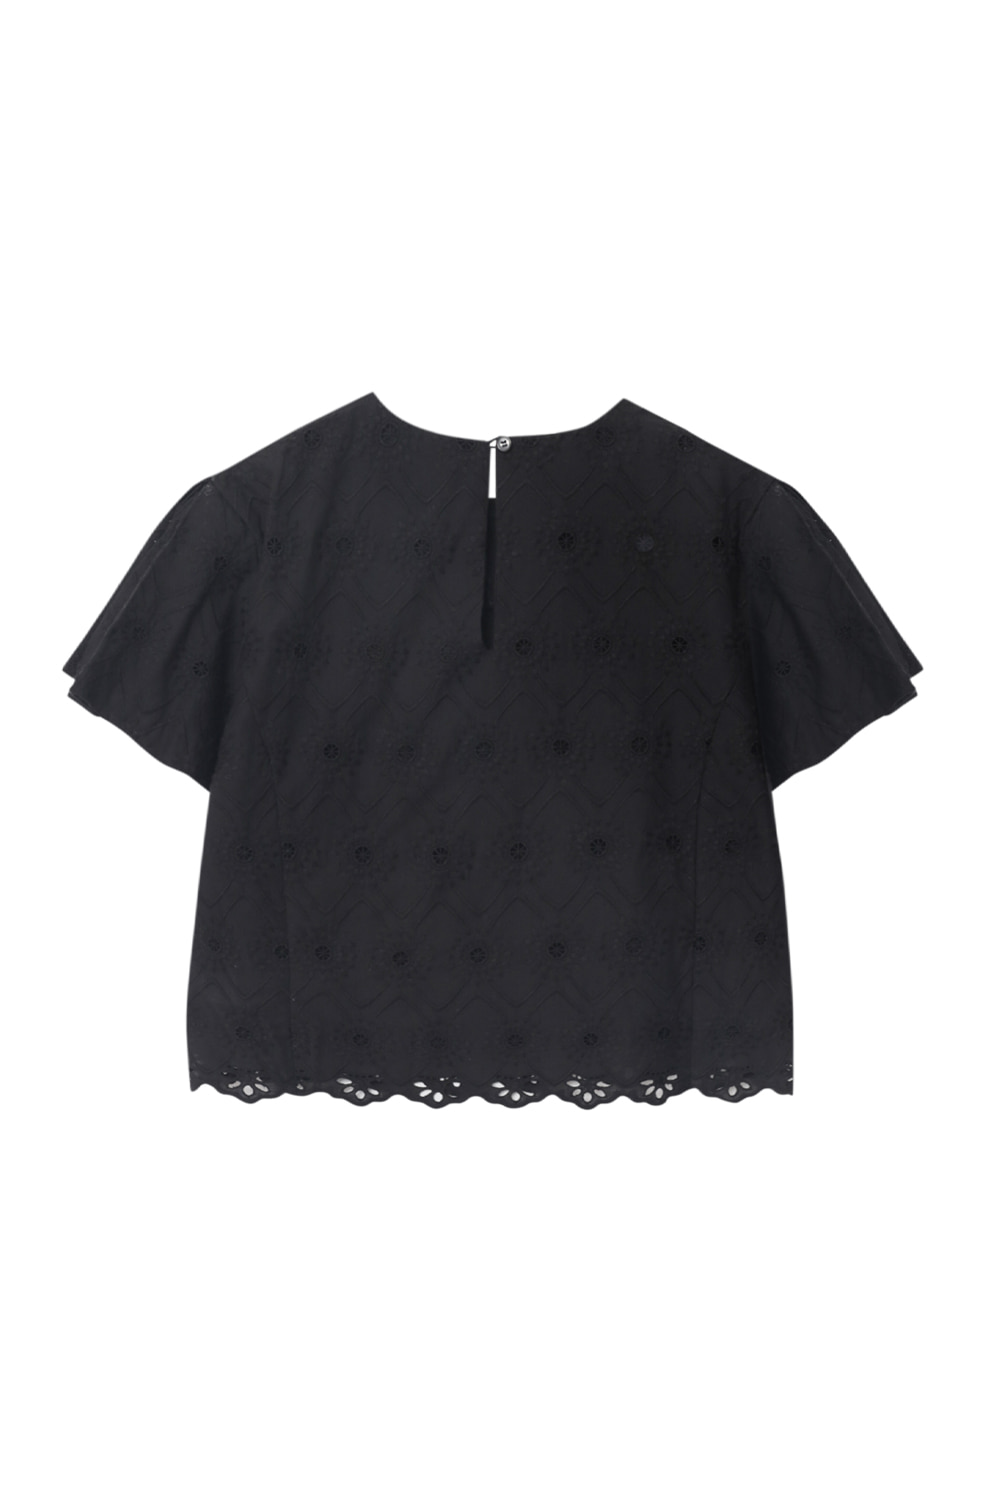 Lace Pleated Sleeve Blouse (Black)